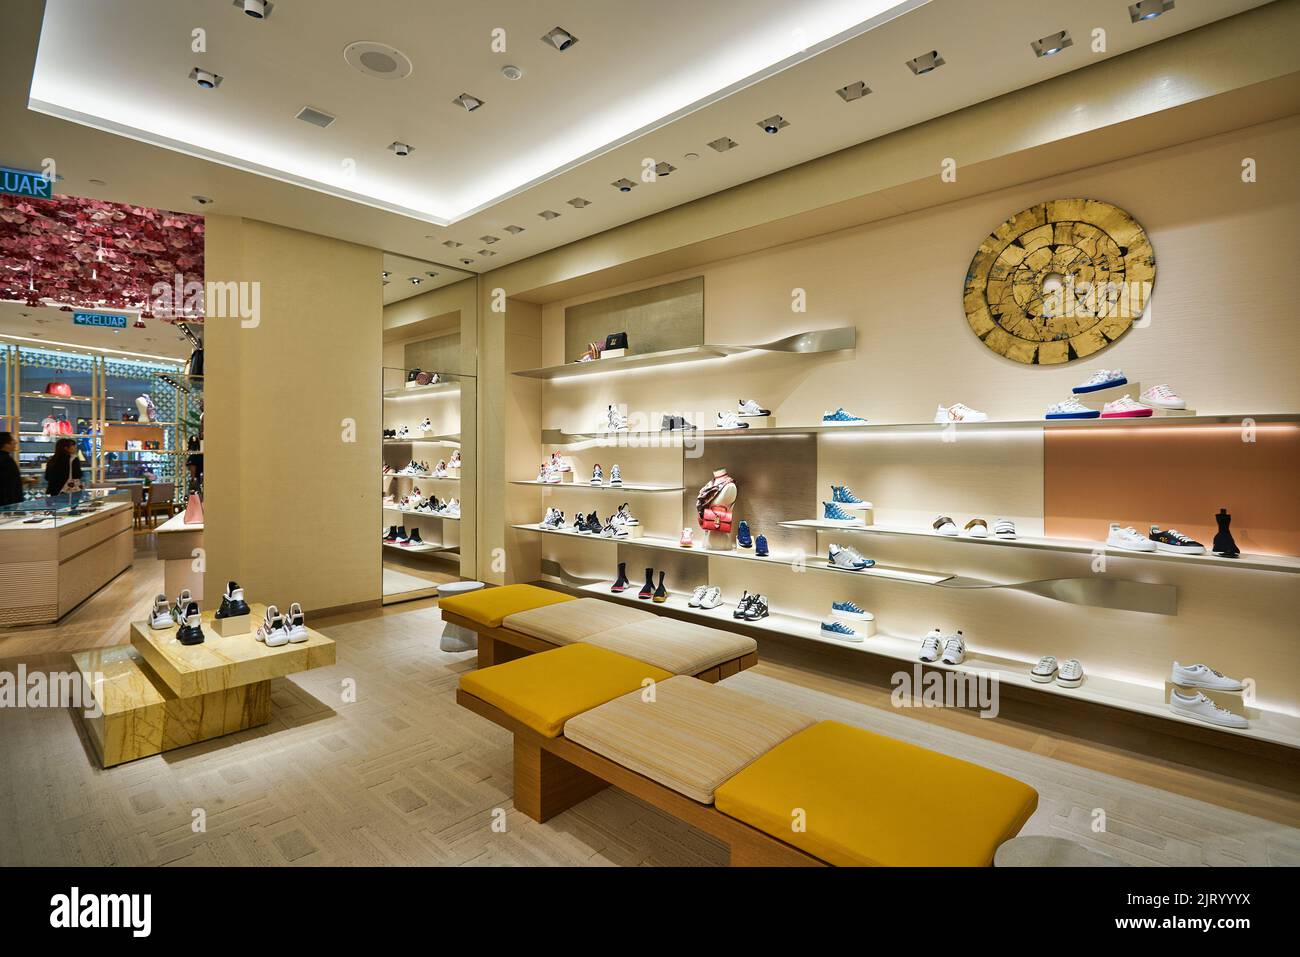 Louis Vuitton boutique, Suria Klcc mall, Kuala Lumpur, Malaysia